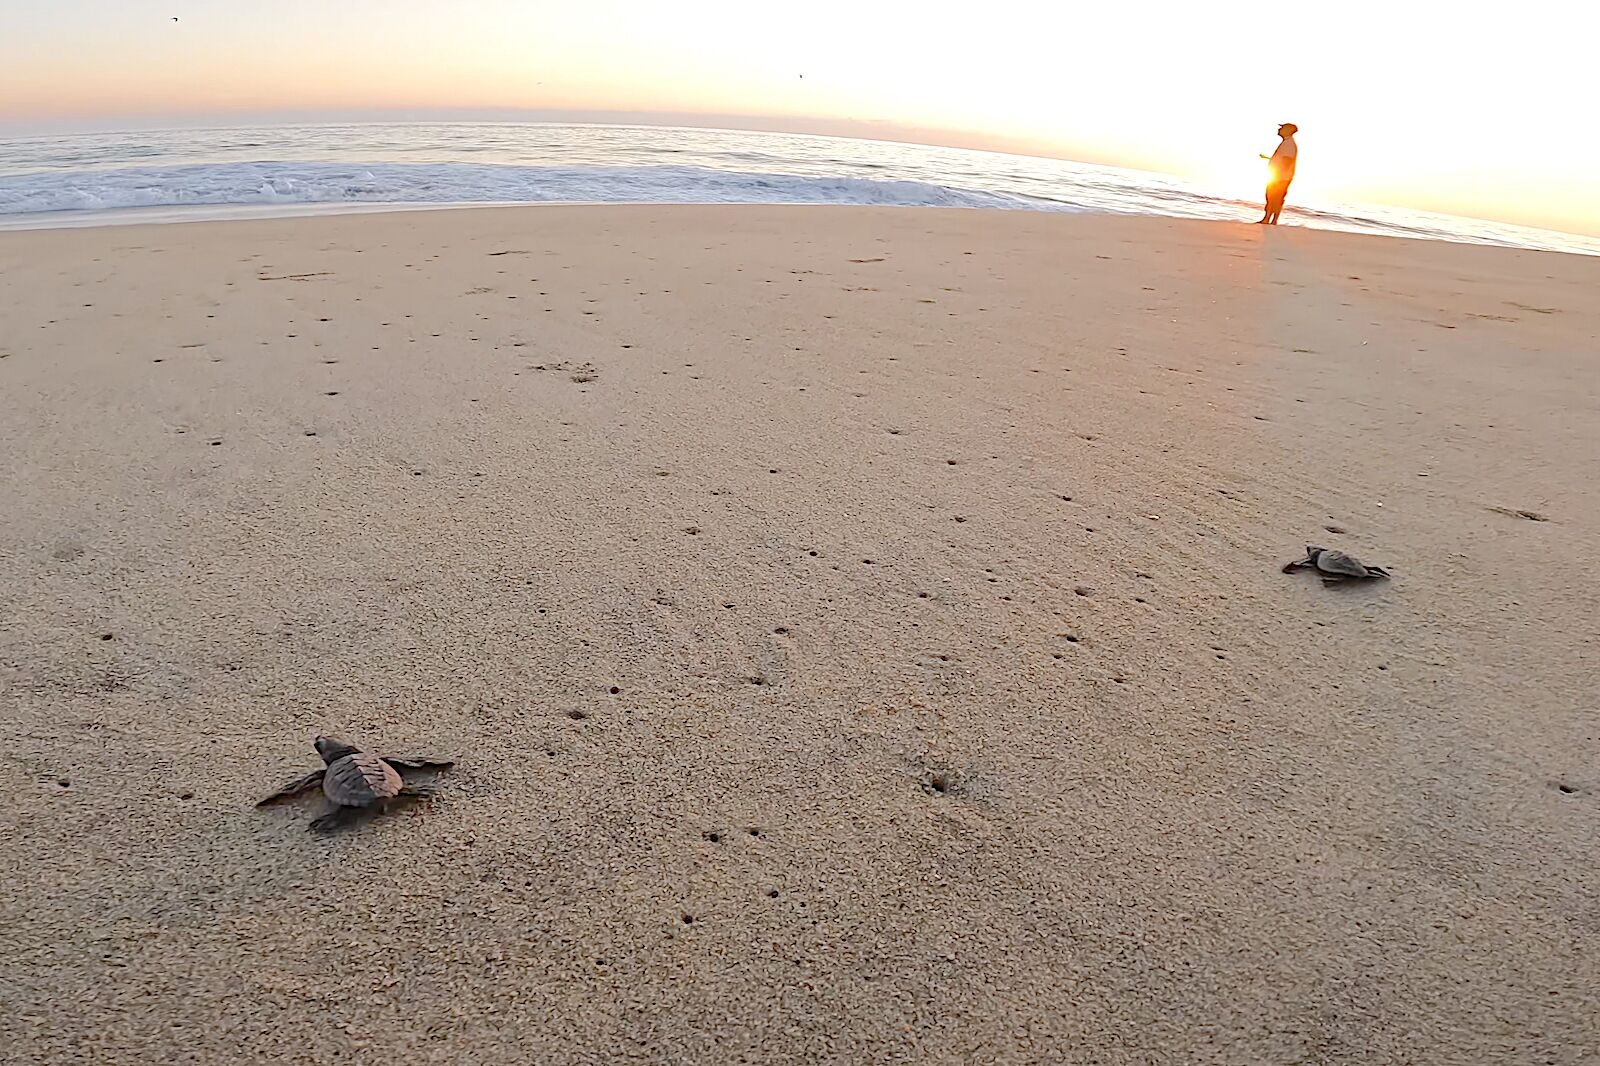 wildlife tourism - baby sea turtles on the sand